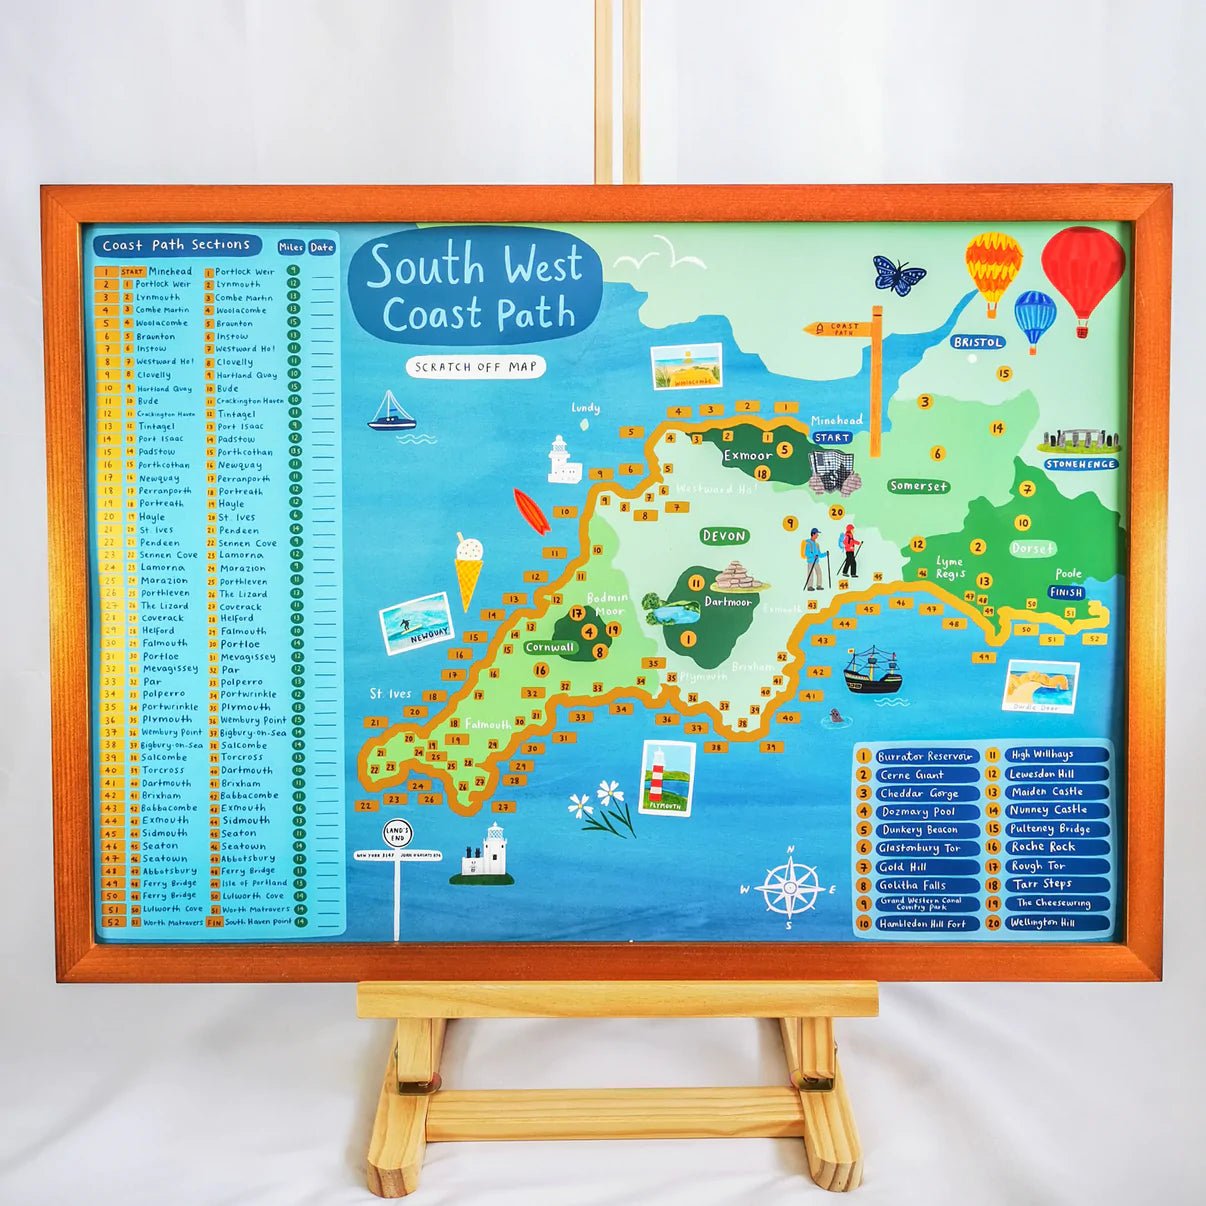 South West Coast Path Scratch Off Map Poster - Readymoney Beach Shop